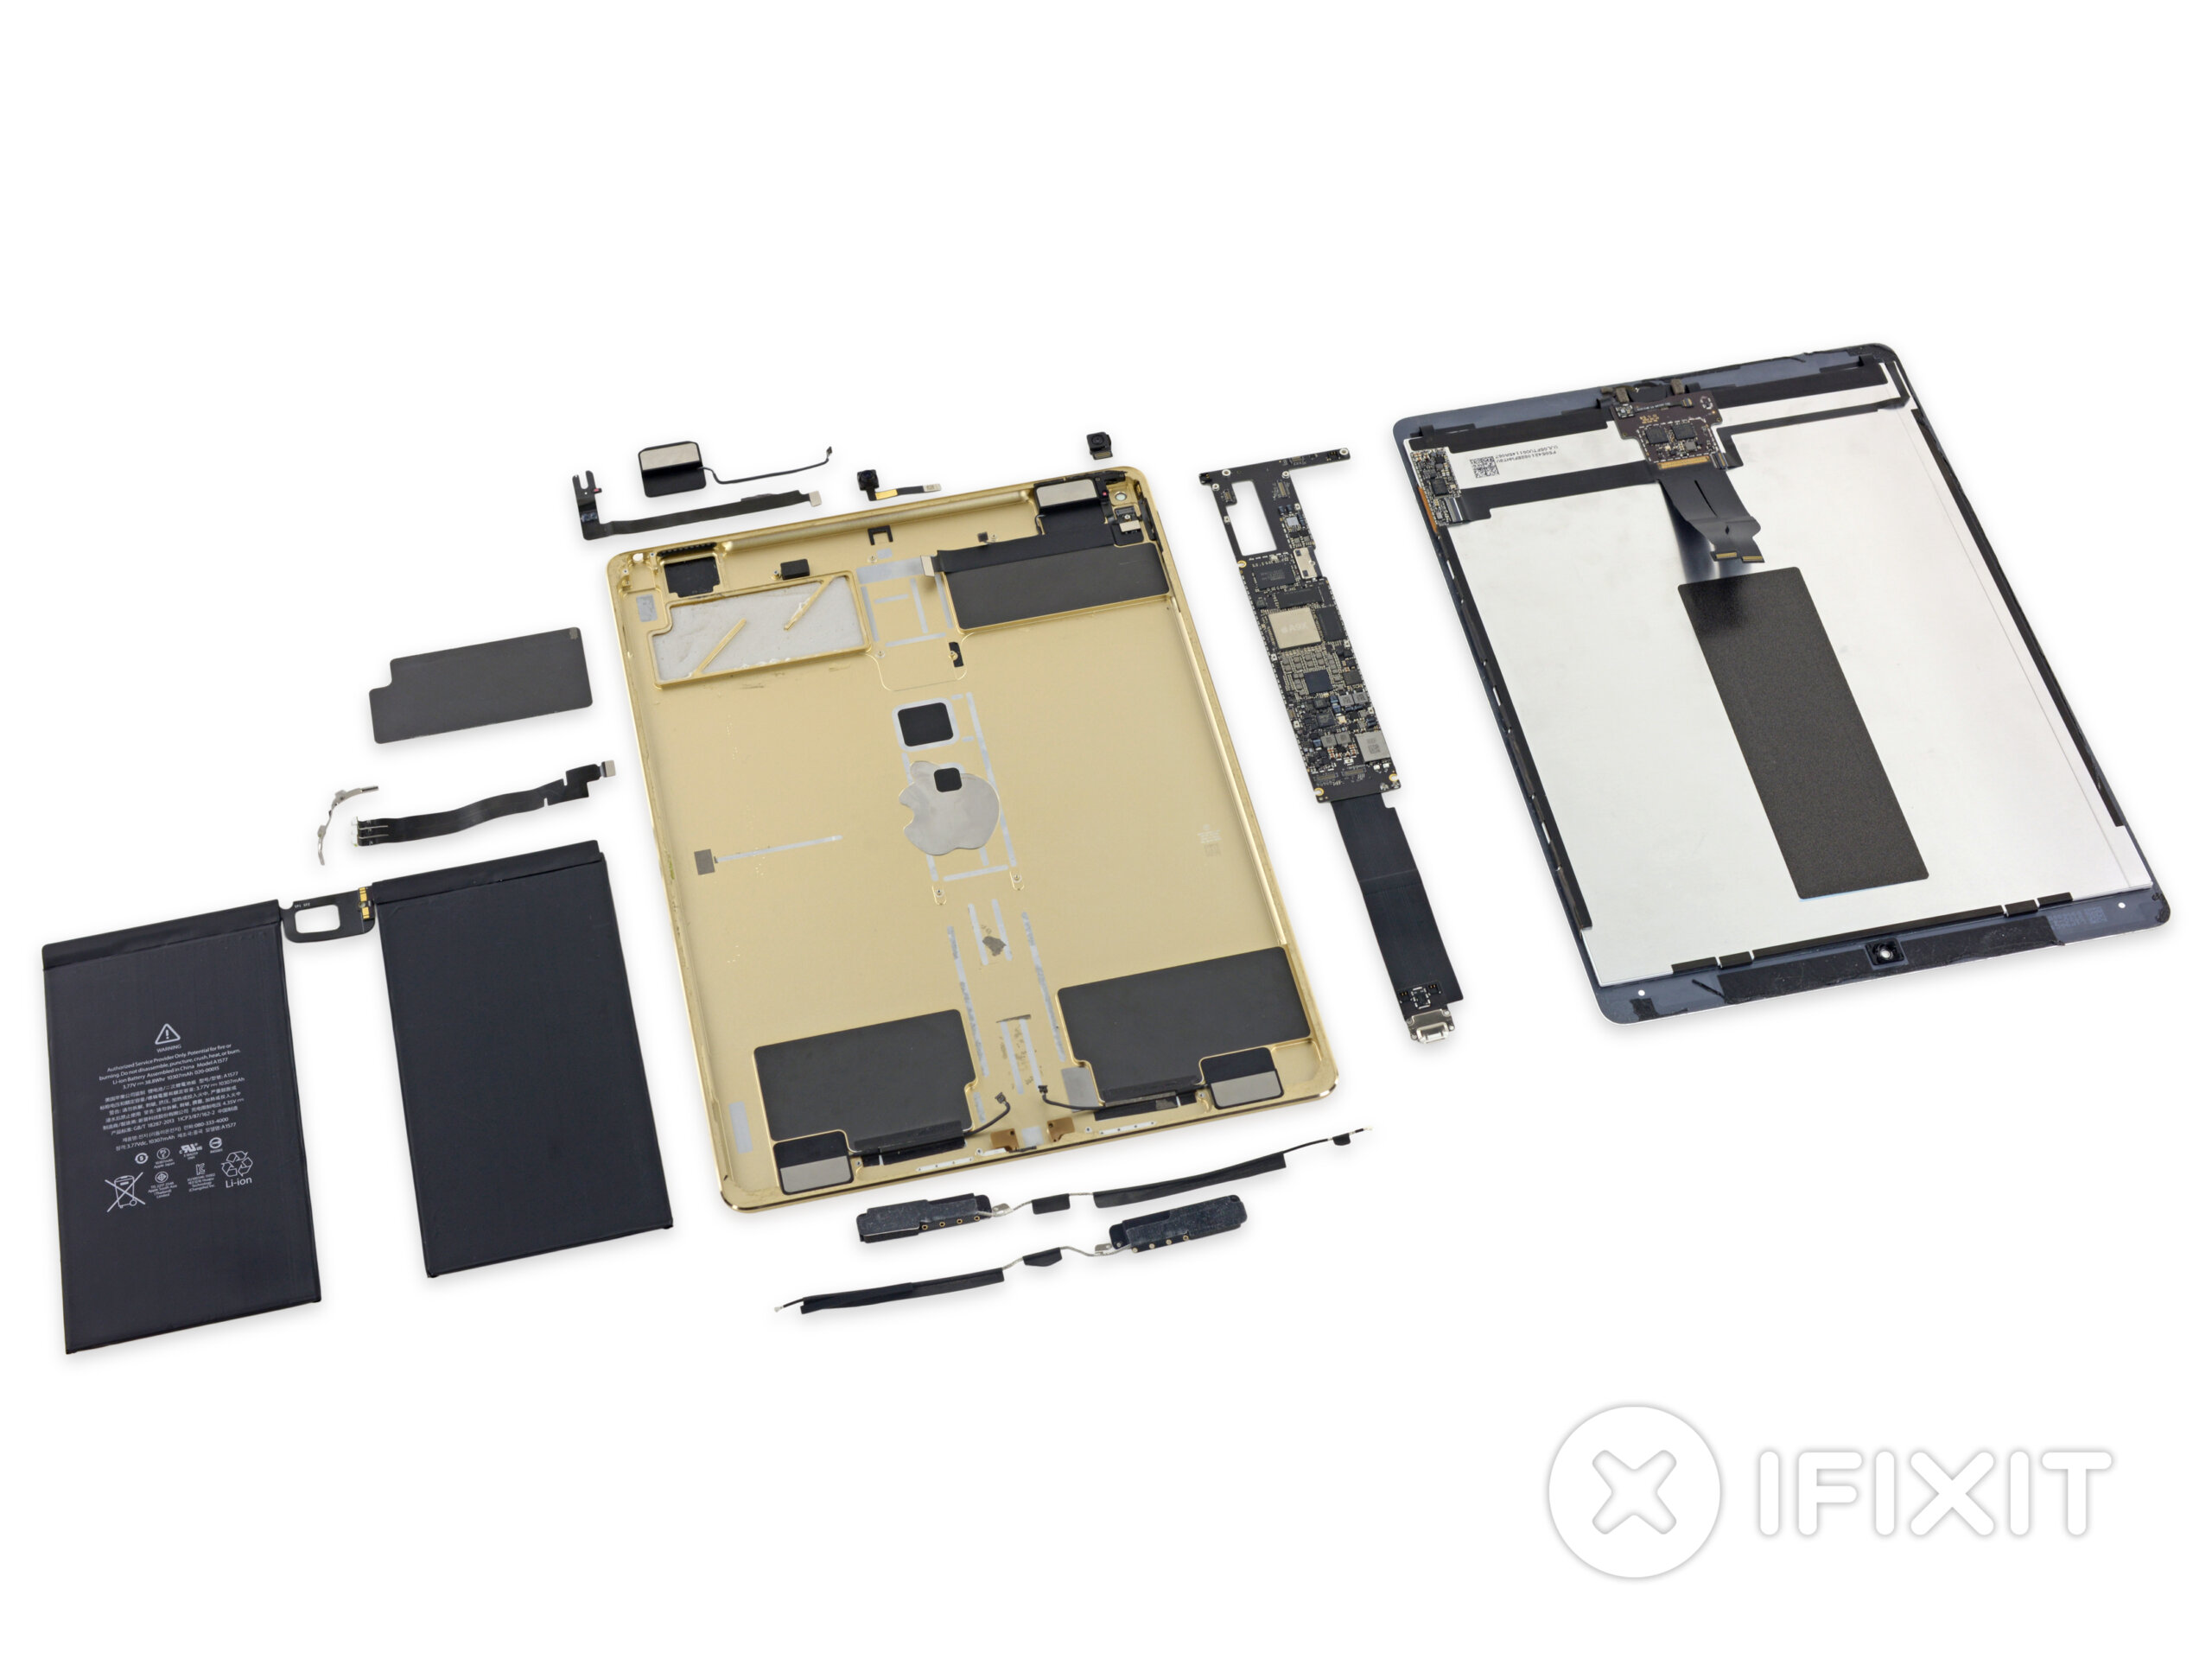 Apple iPad Pro teardown by iFixit 8 scaled